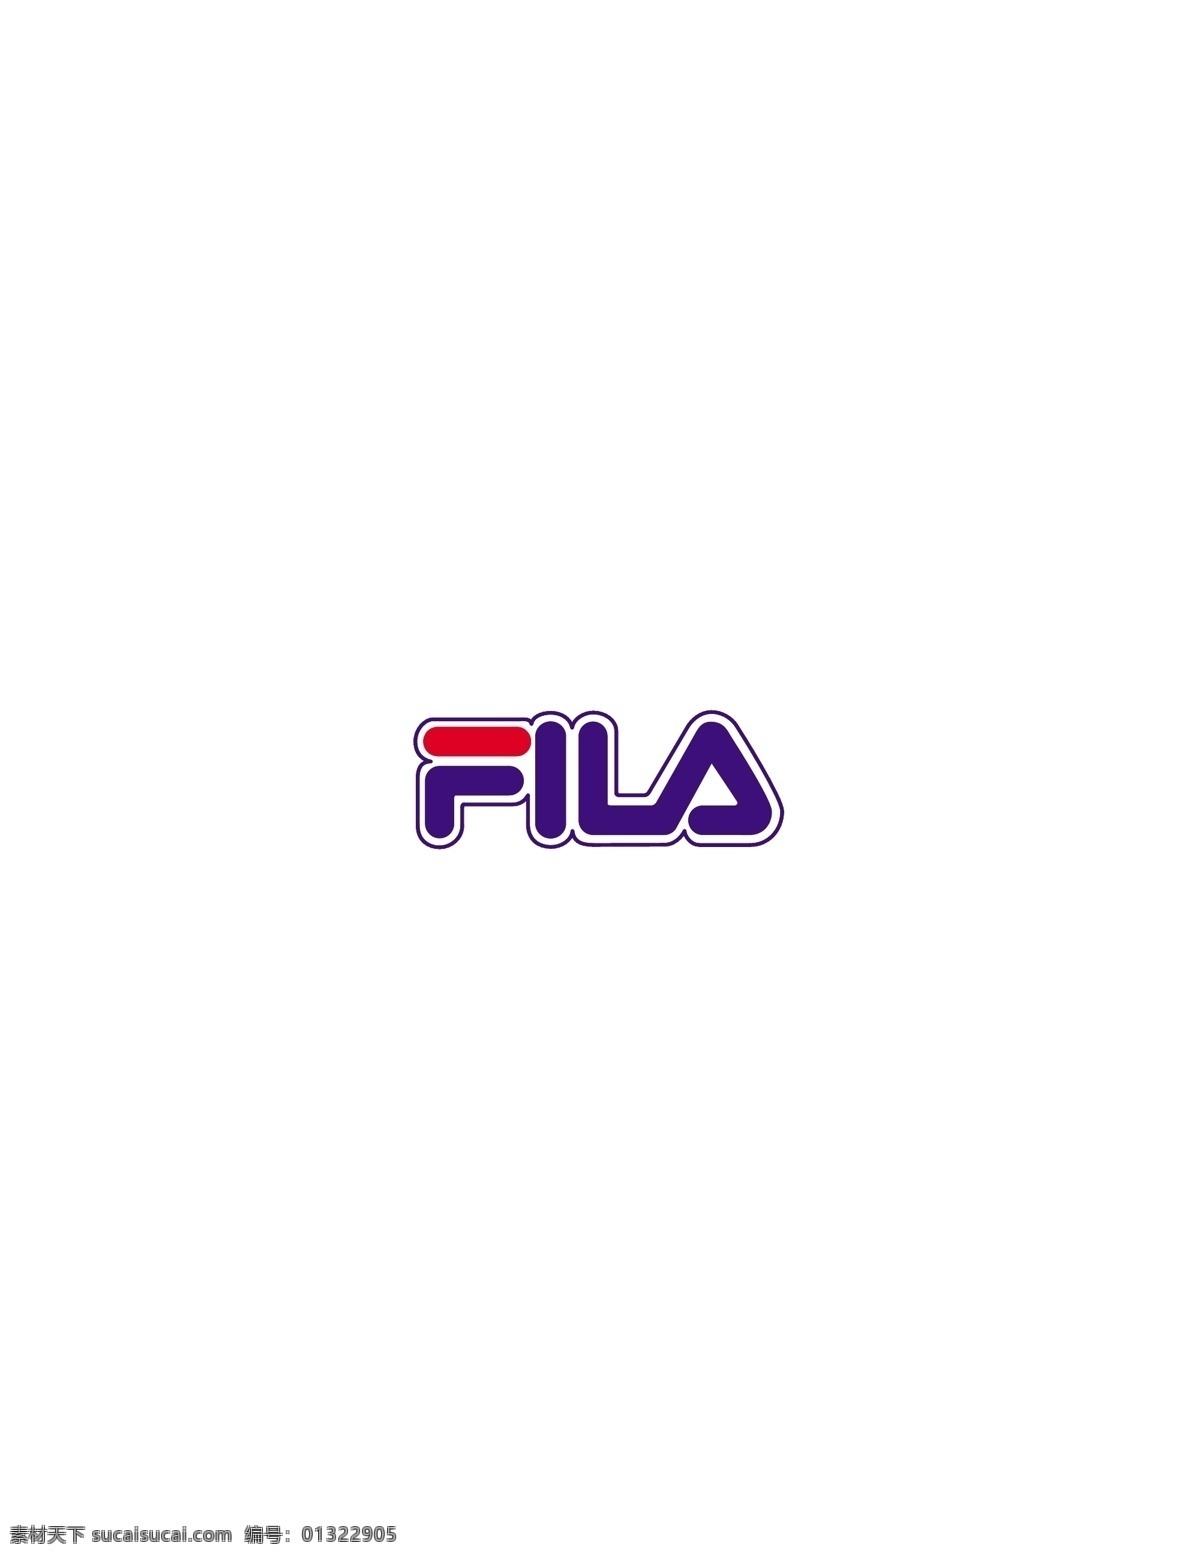 fila 斐乐 logo 意大利 运动 品牌 红蓝色搭 矢量图 其他矢量图